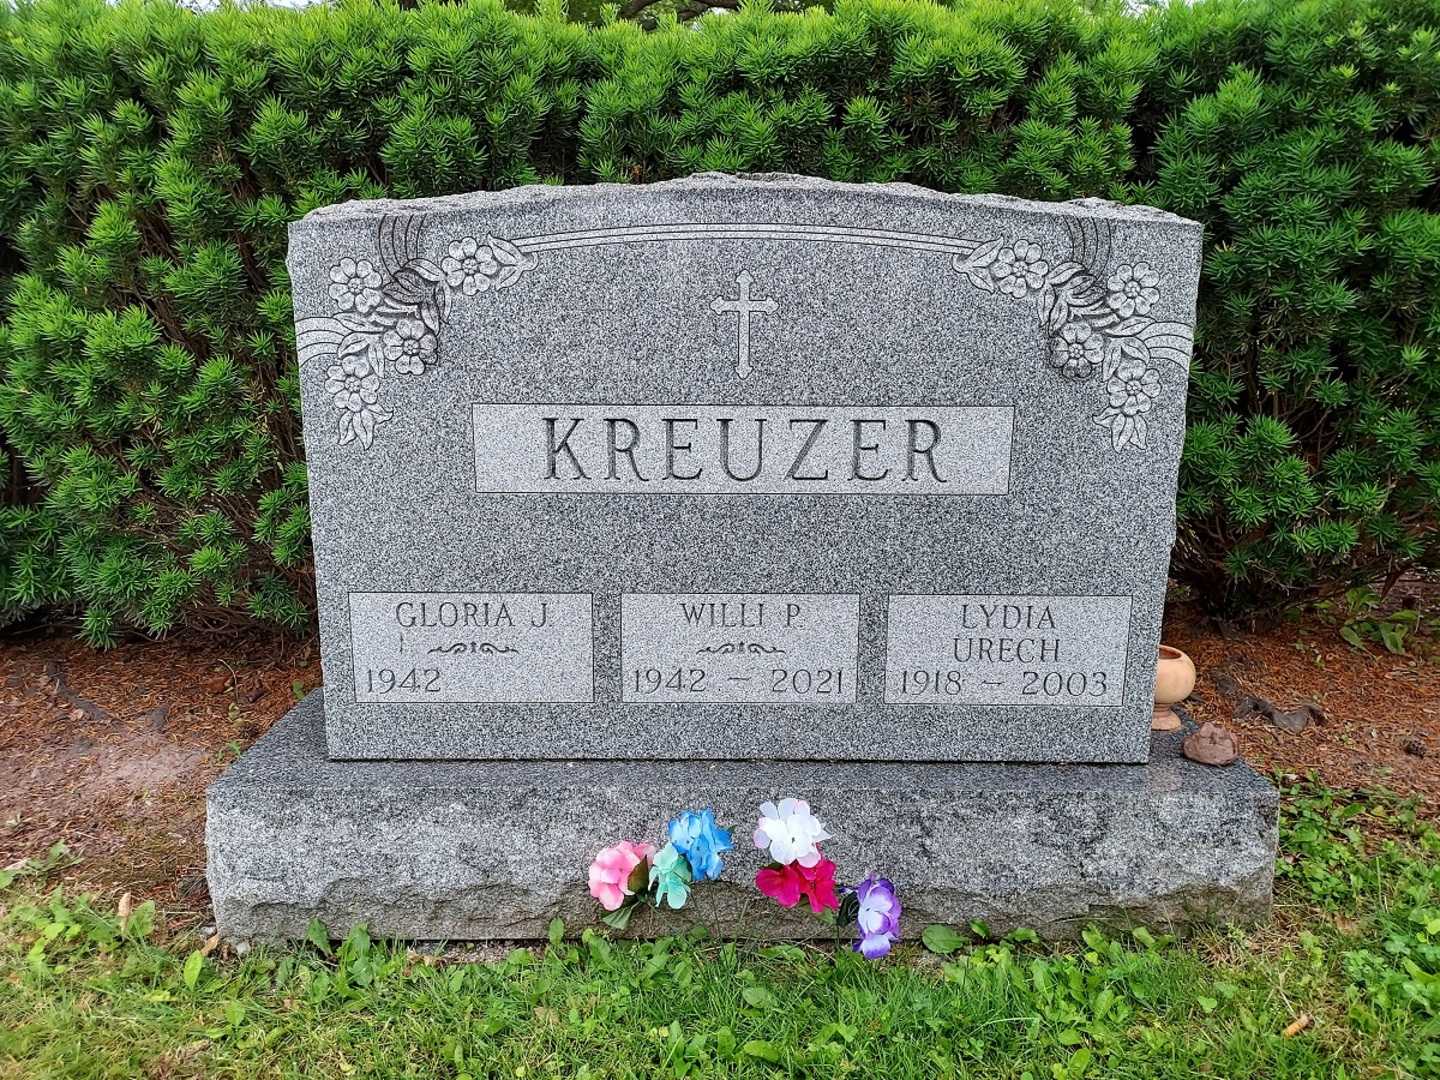 Lydia Urech Kreuzer's grave